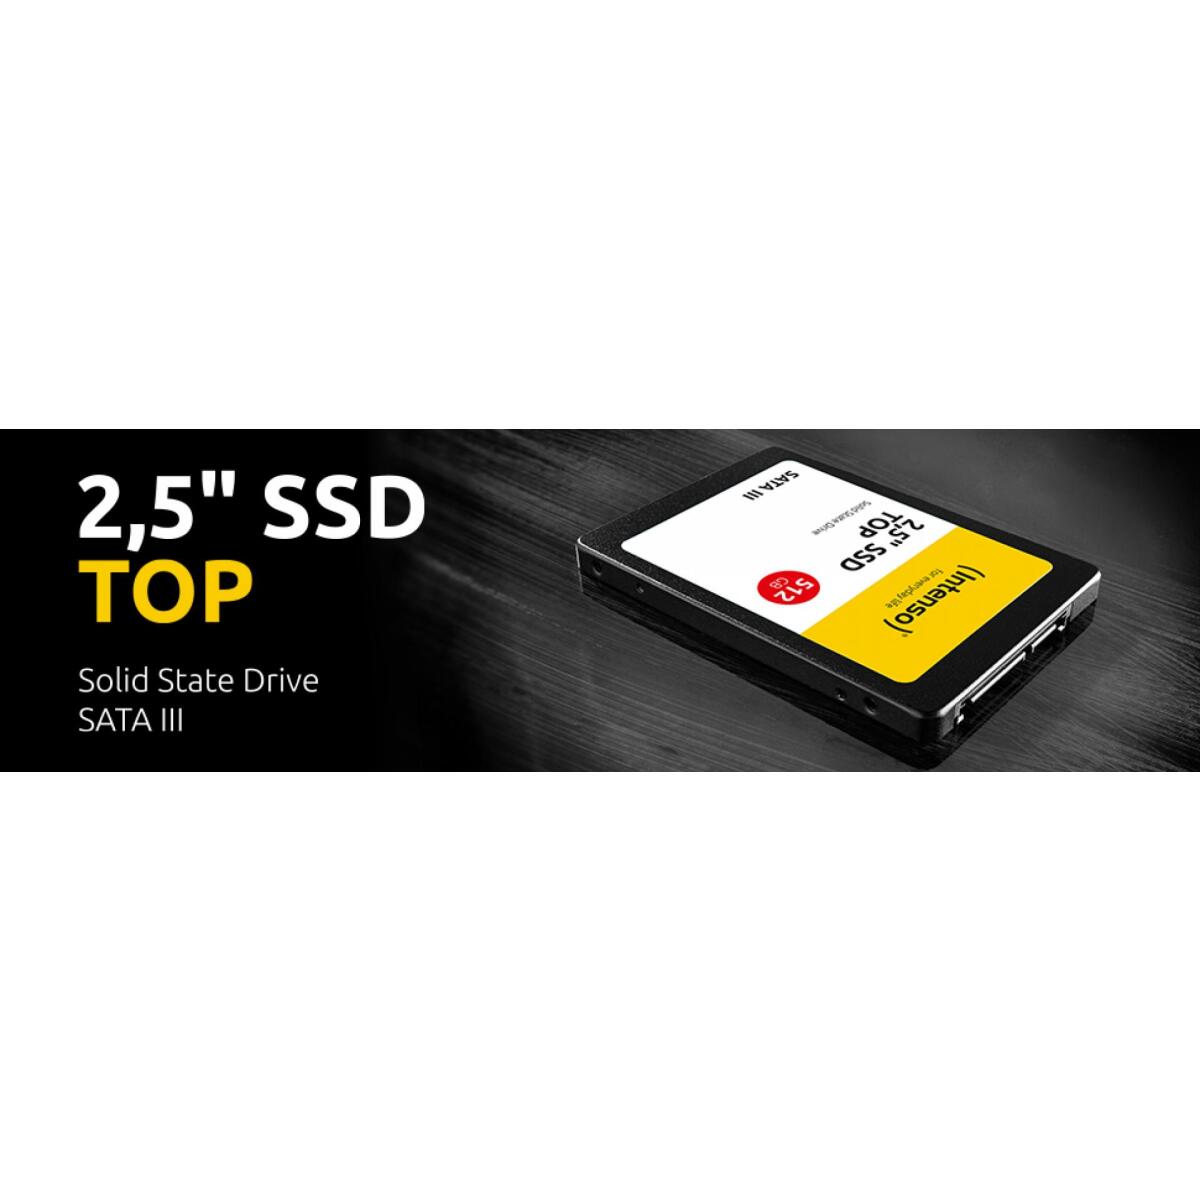 SSD Intenso 512GB TOP SATA3 2,5'' intern - Computerhilfe OWL Onlinesh,  40,16 €